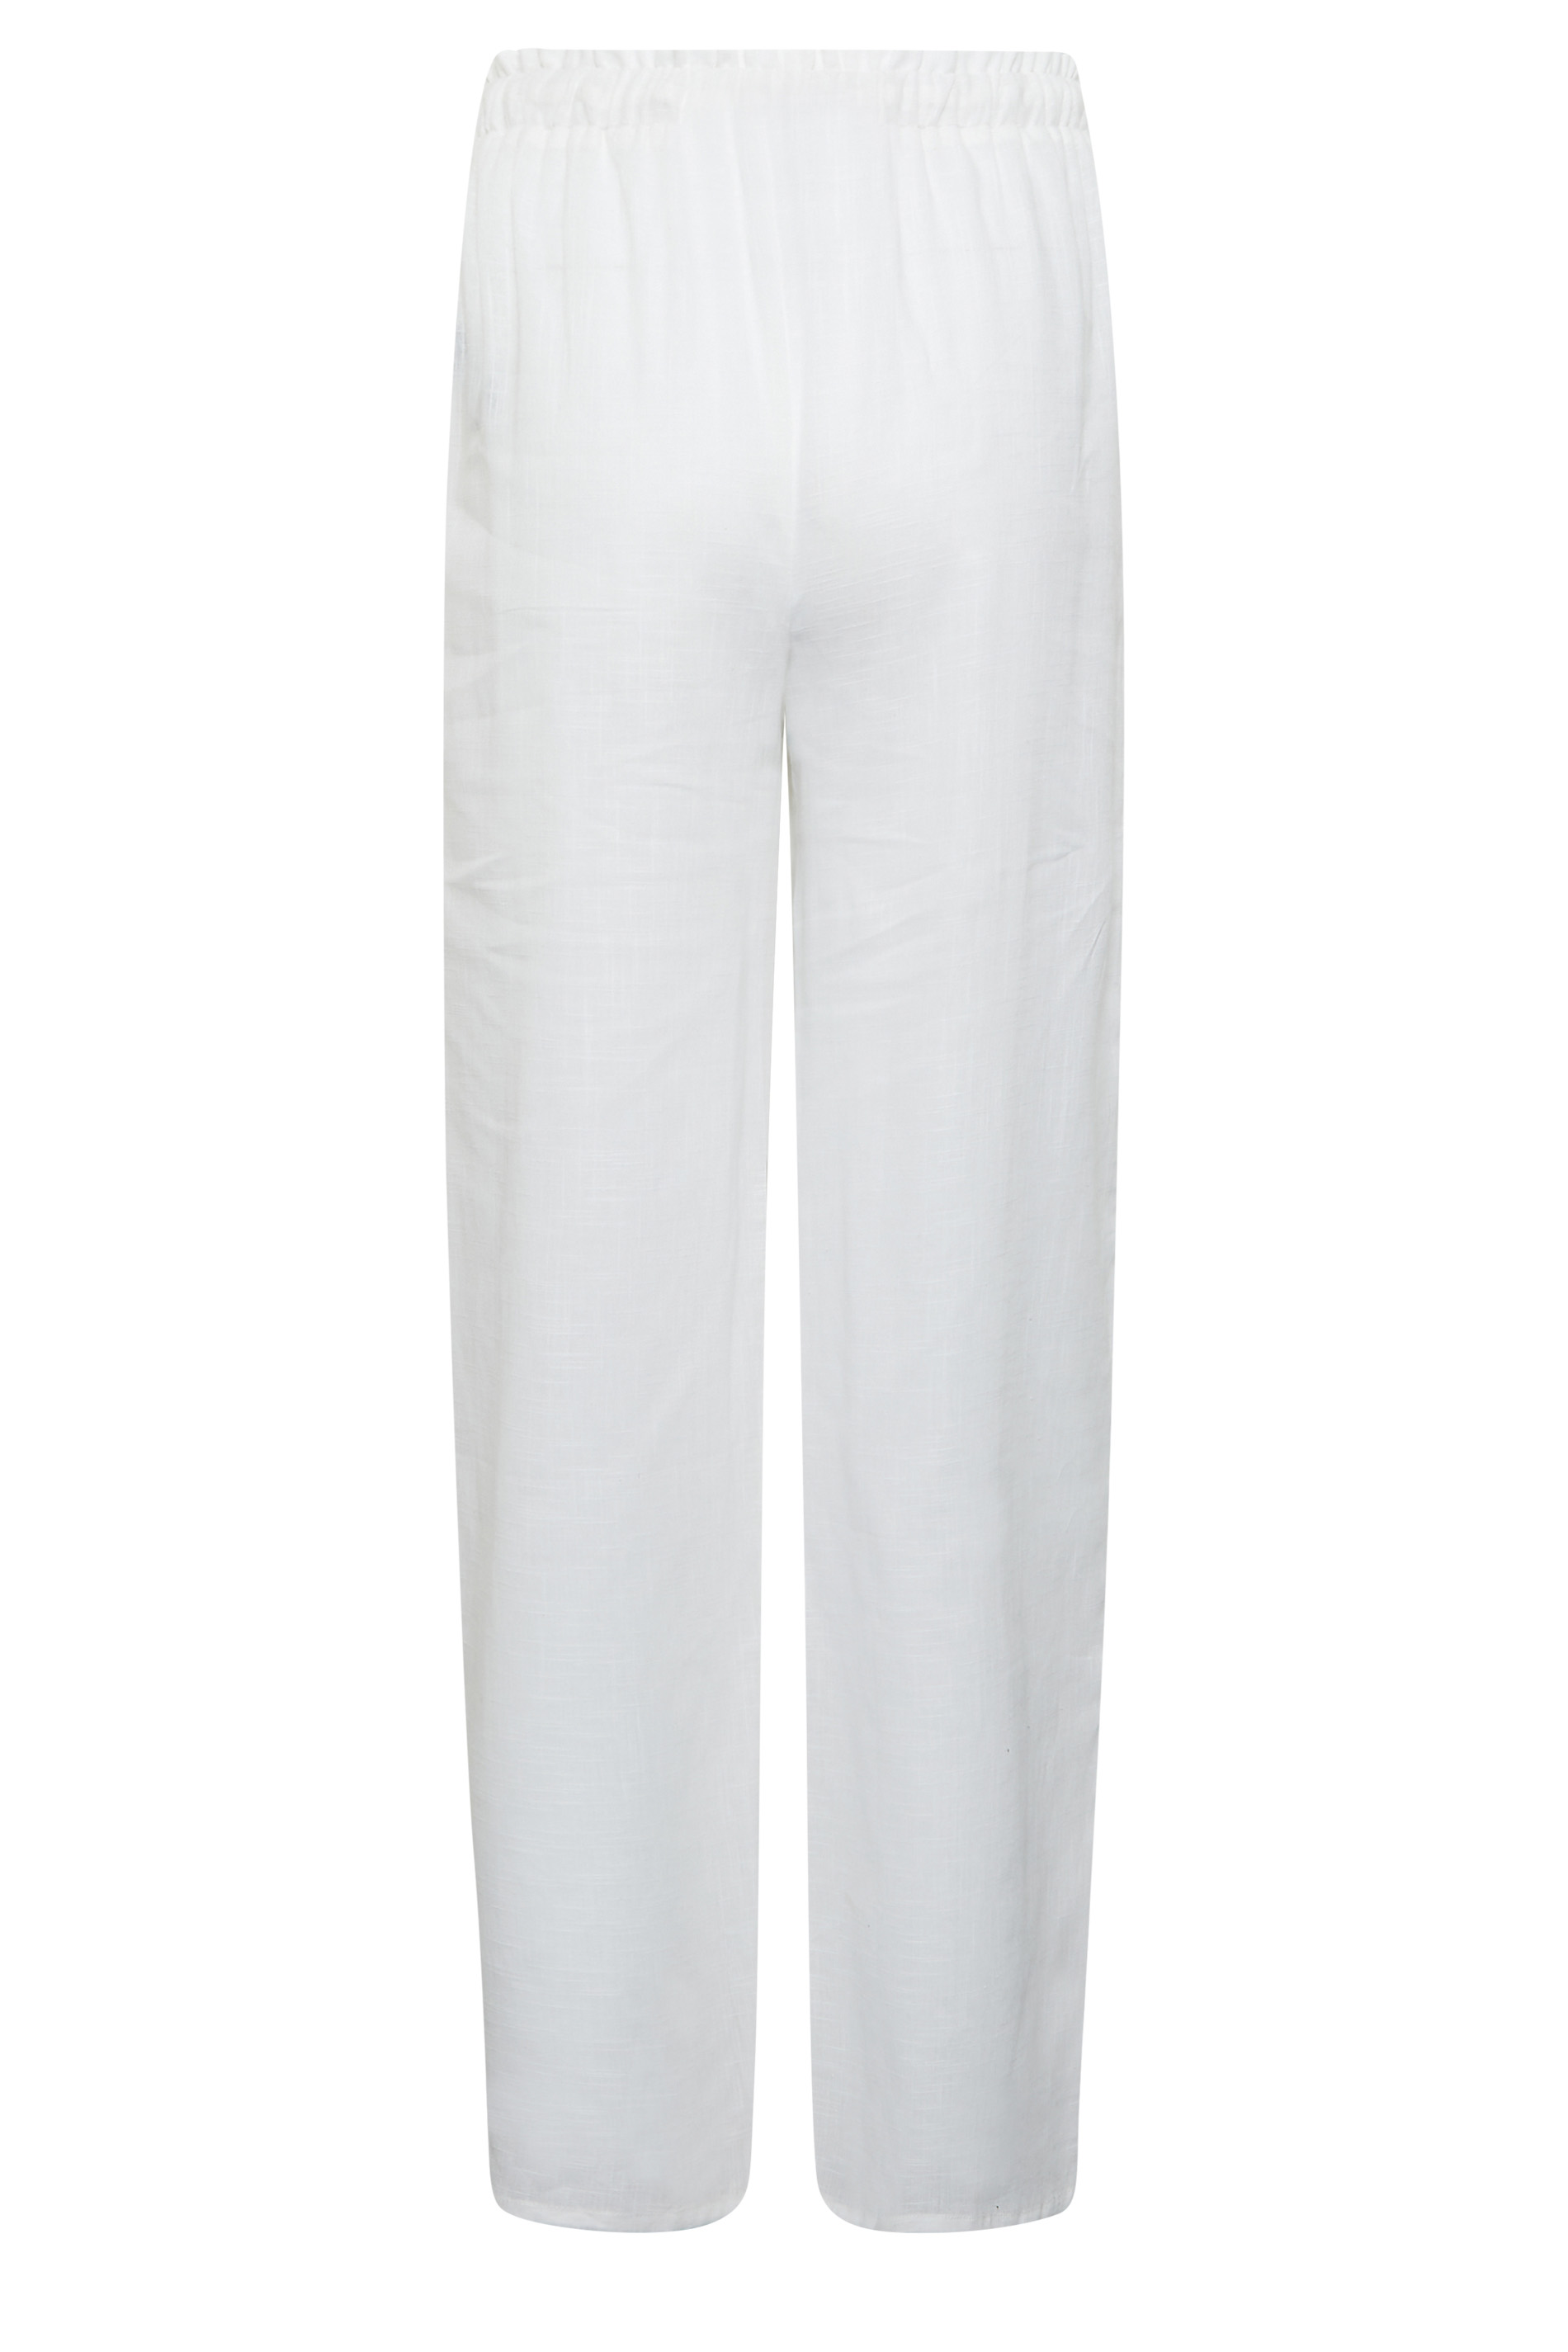 LTS Tall Women's White Cotton Wide Leg Beach Trousers | Long Tall Sally  3